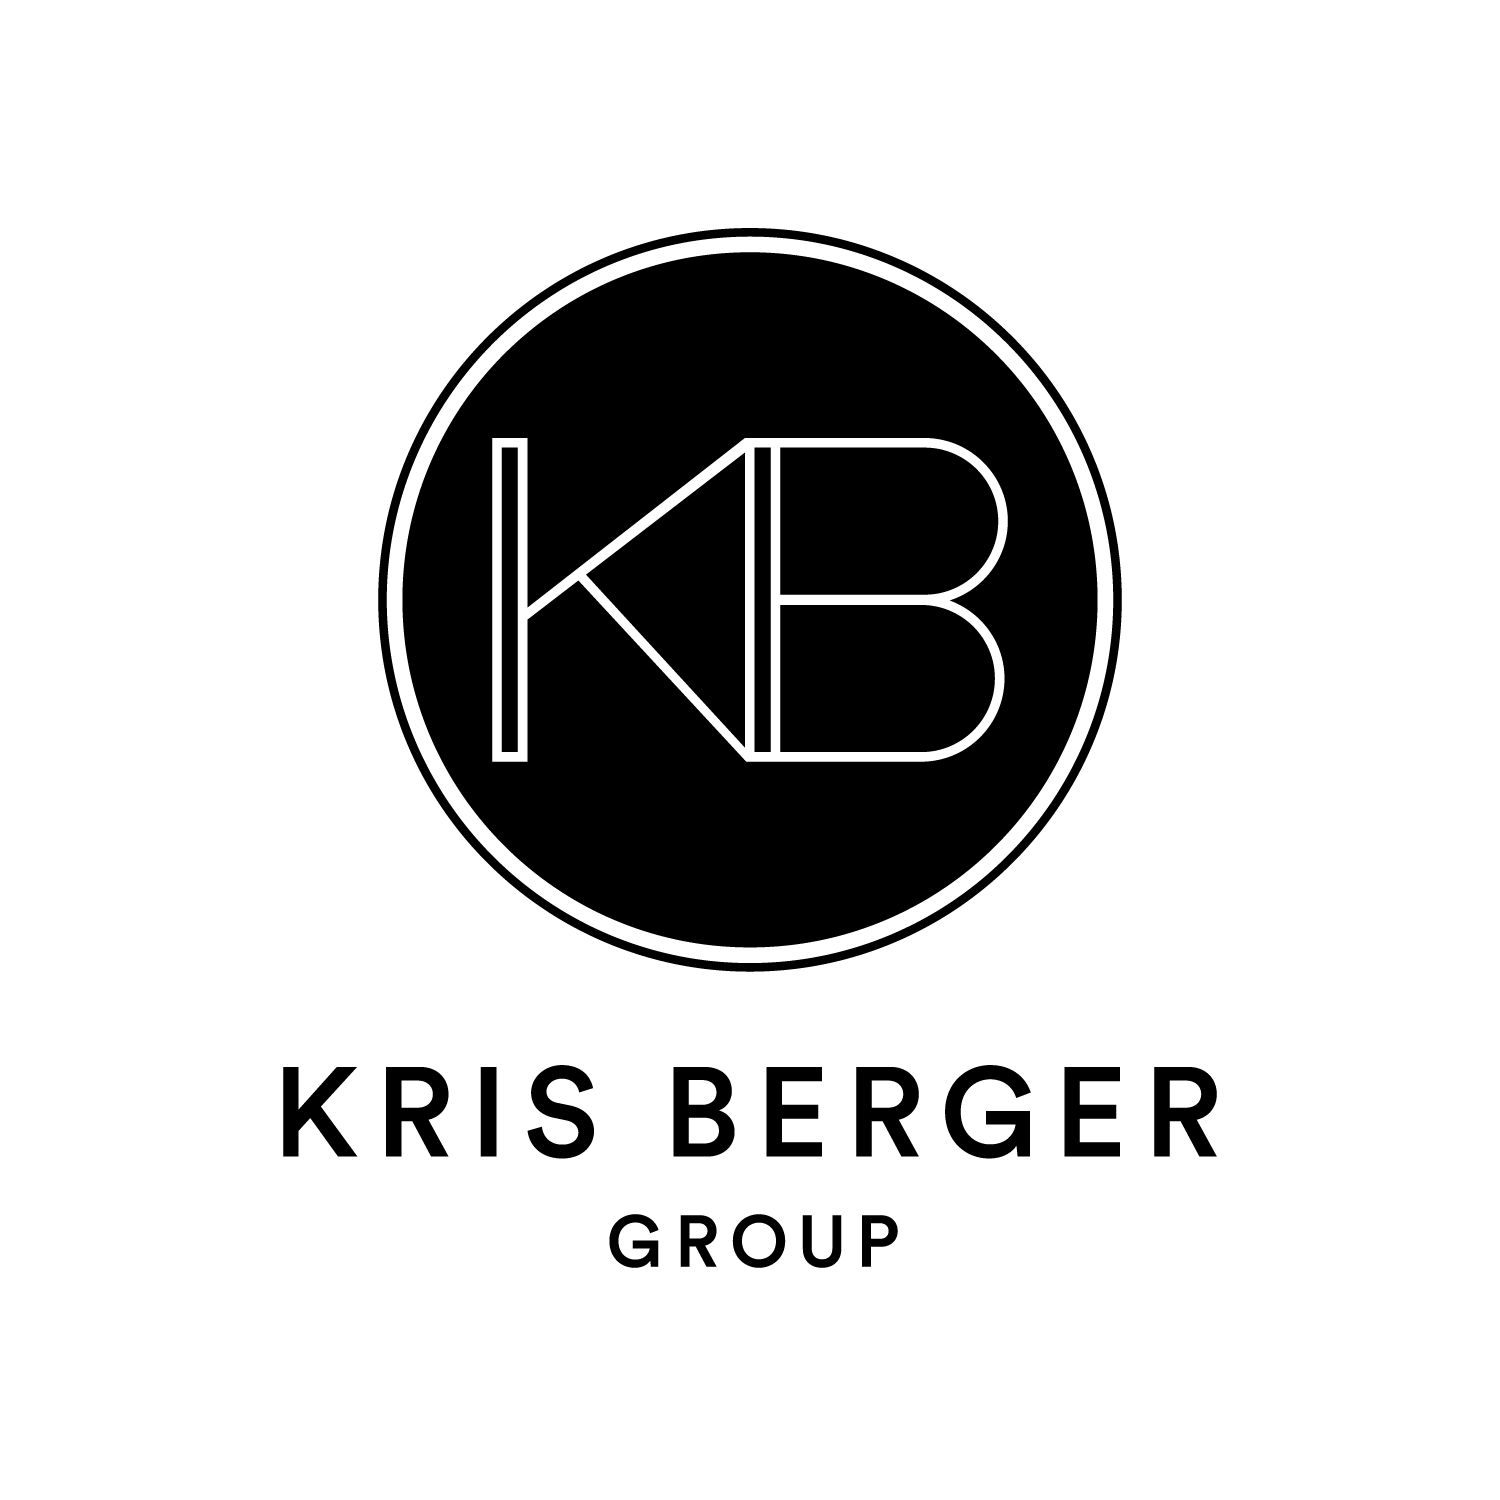 The logo of KRIS BERGERGROUP